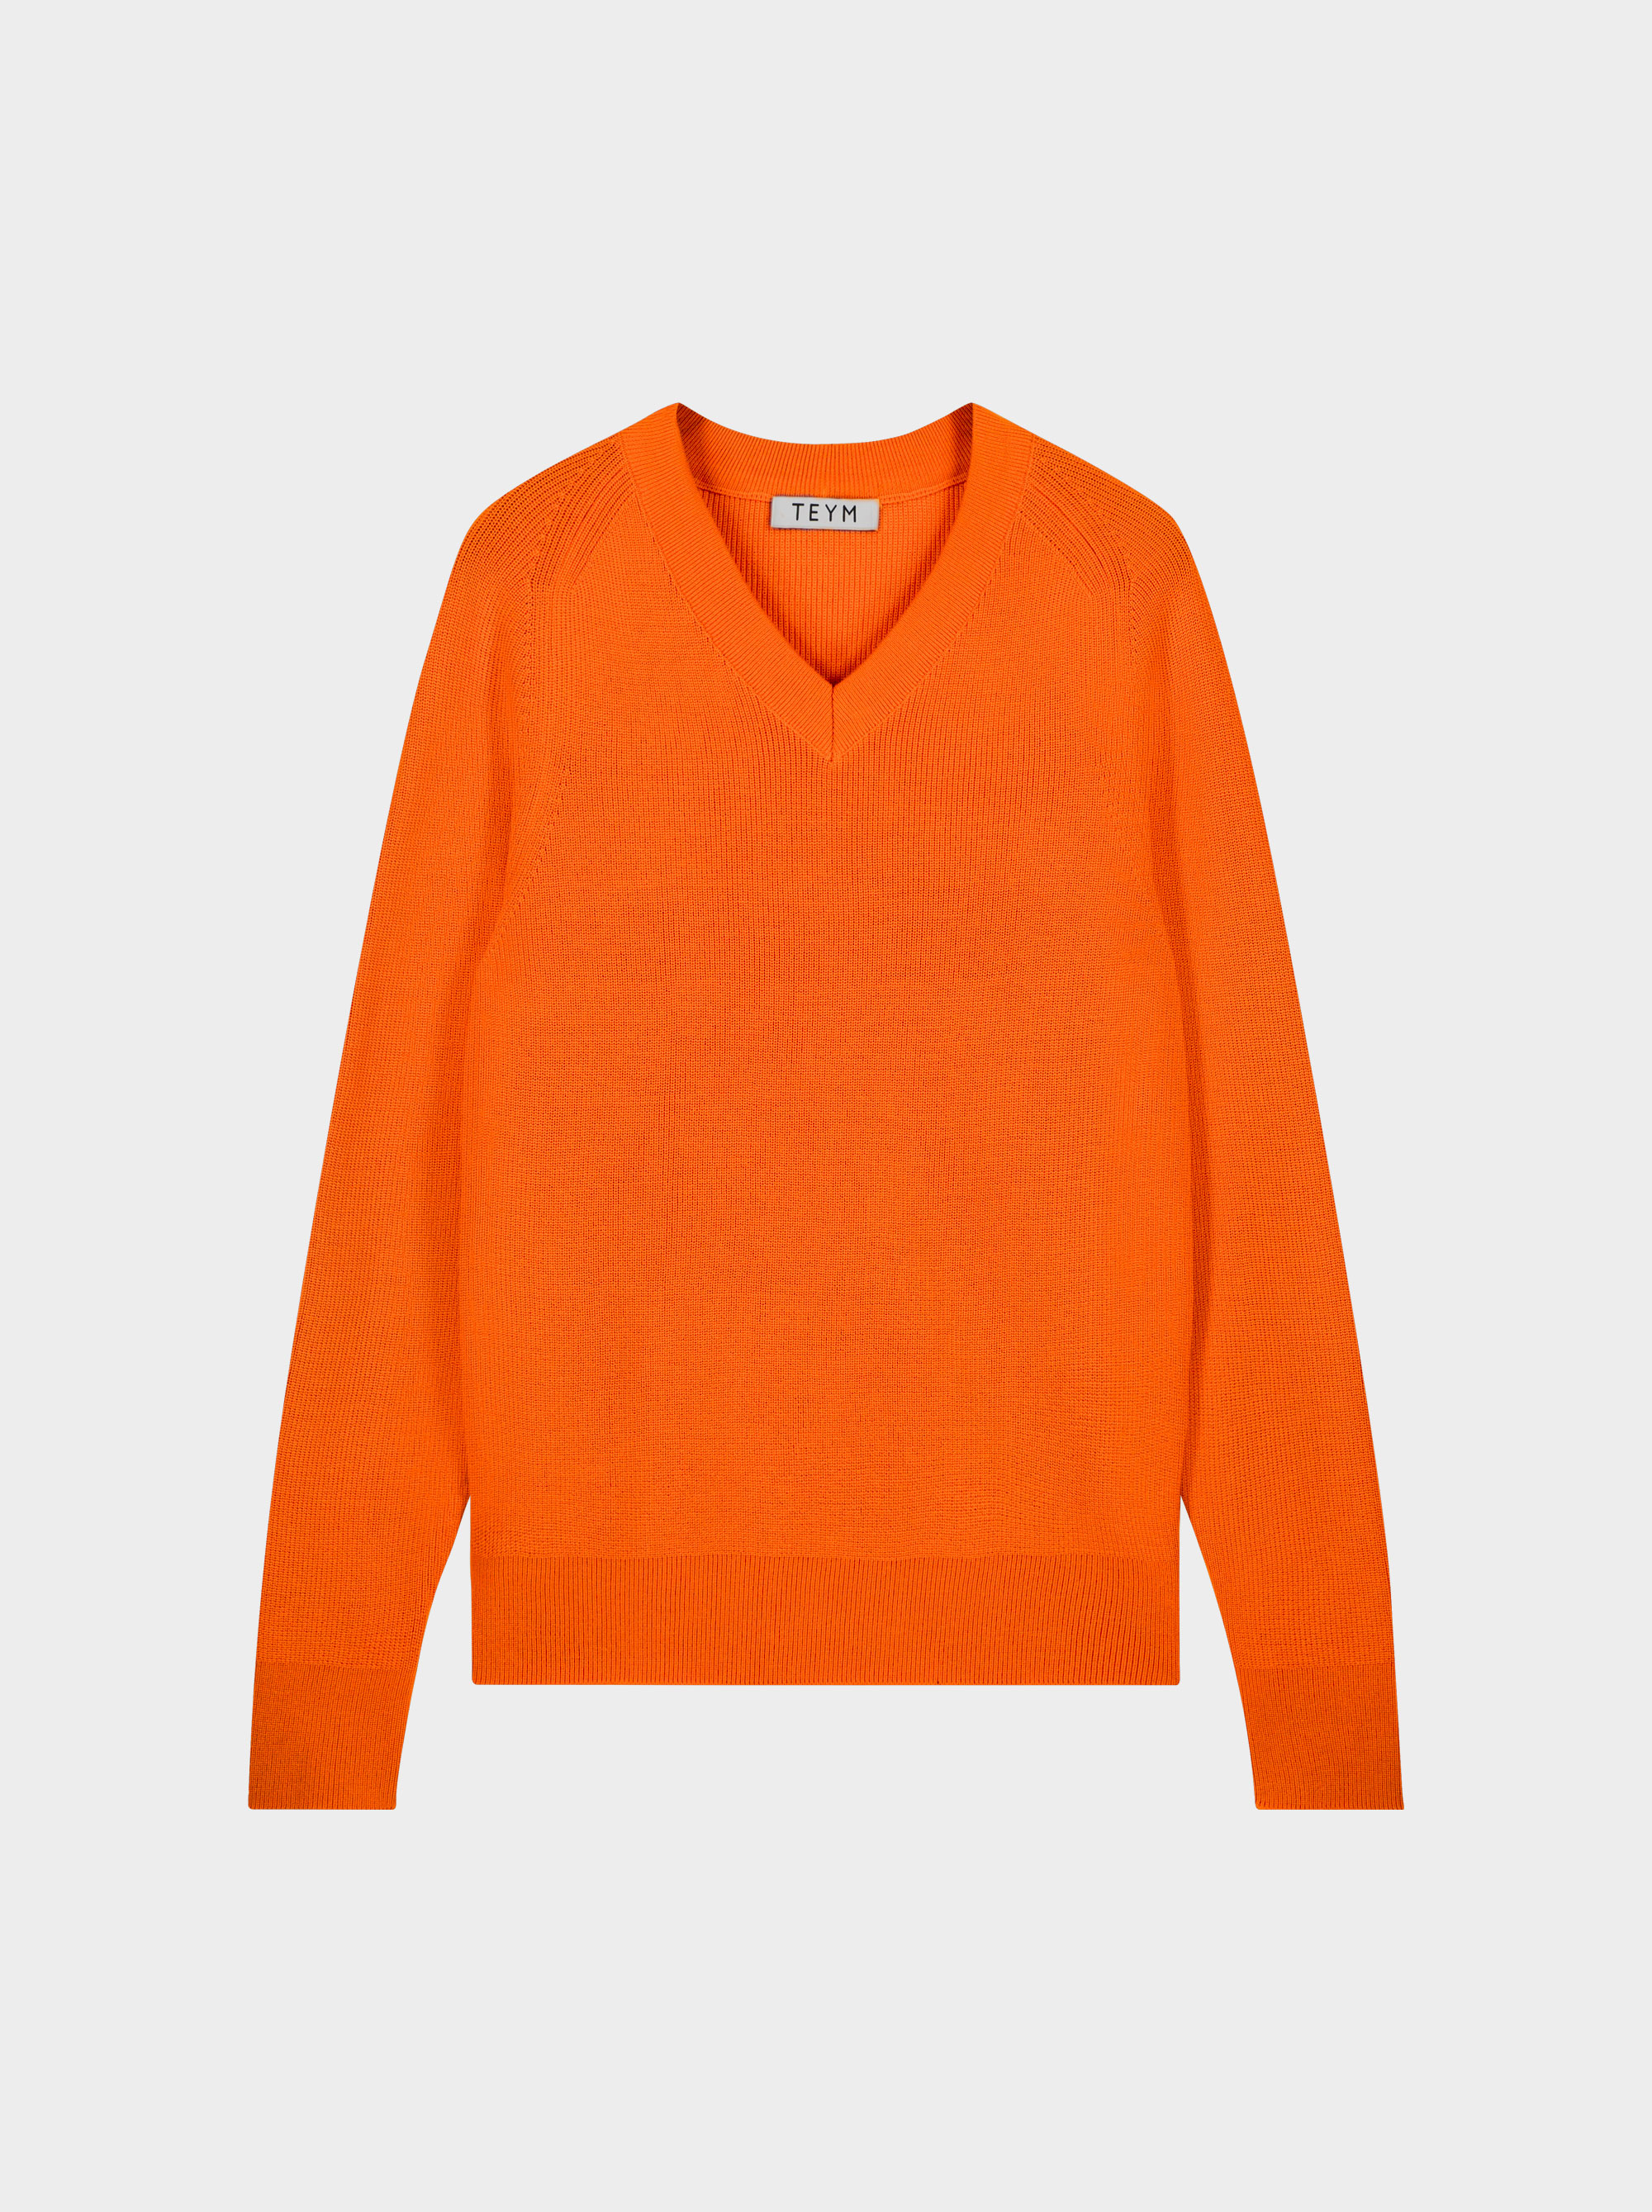 Teym - V-Neck - The Merino Sweater - Women - Orange - 3